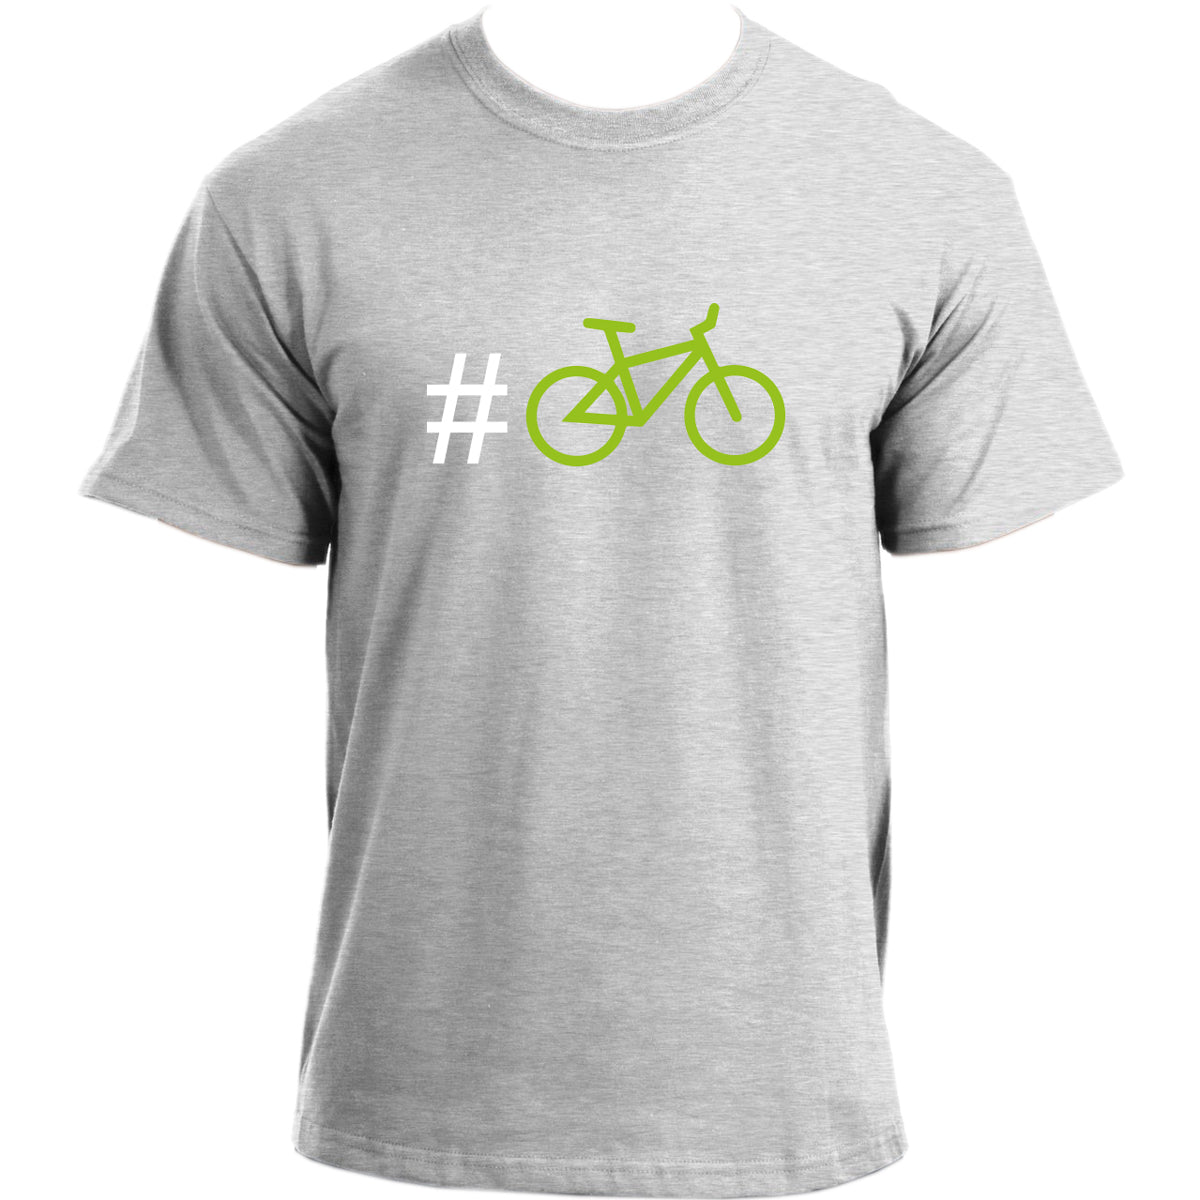 Hashtag bike - Bicycle tee Cycling sports top Cotton Short Sleeve T shirt